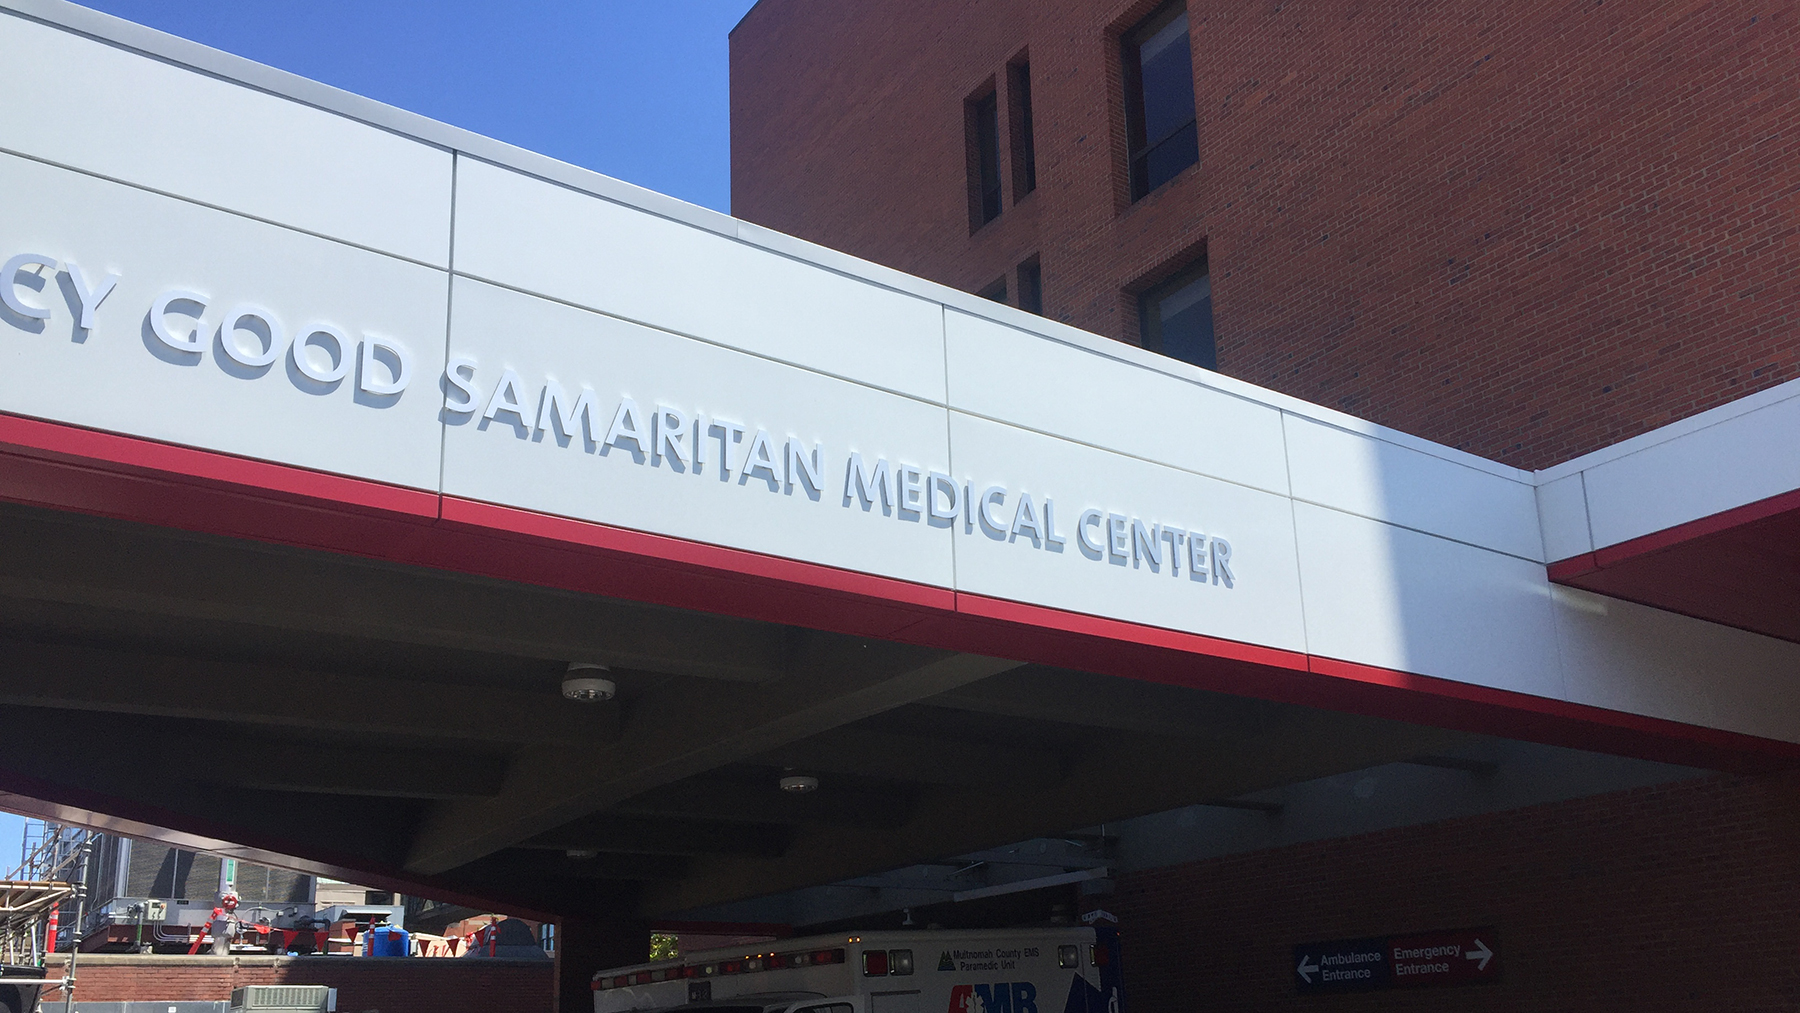 Good Samaritan Medical Center Architectural Building Products